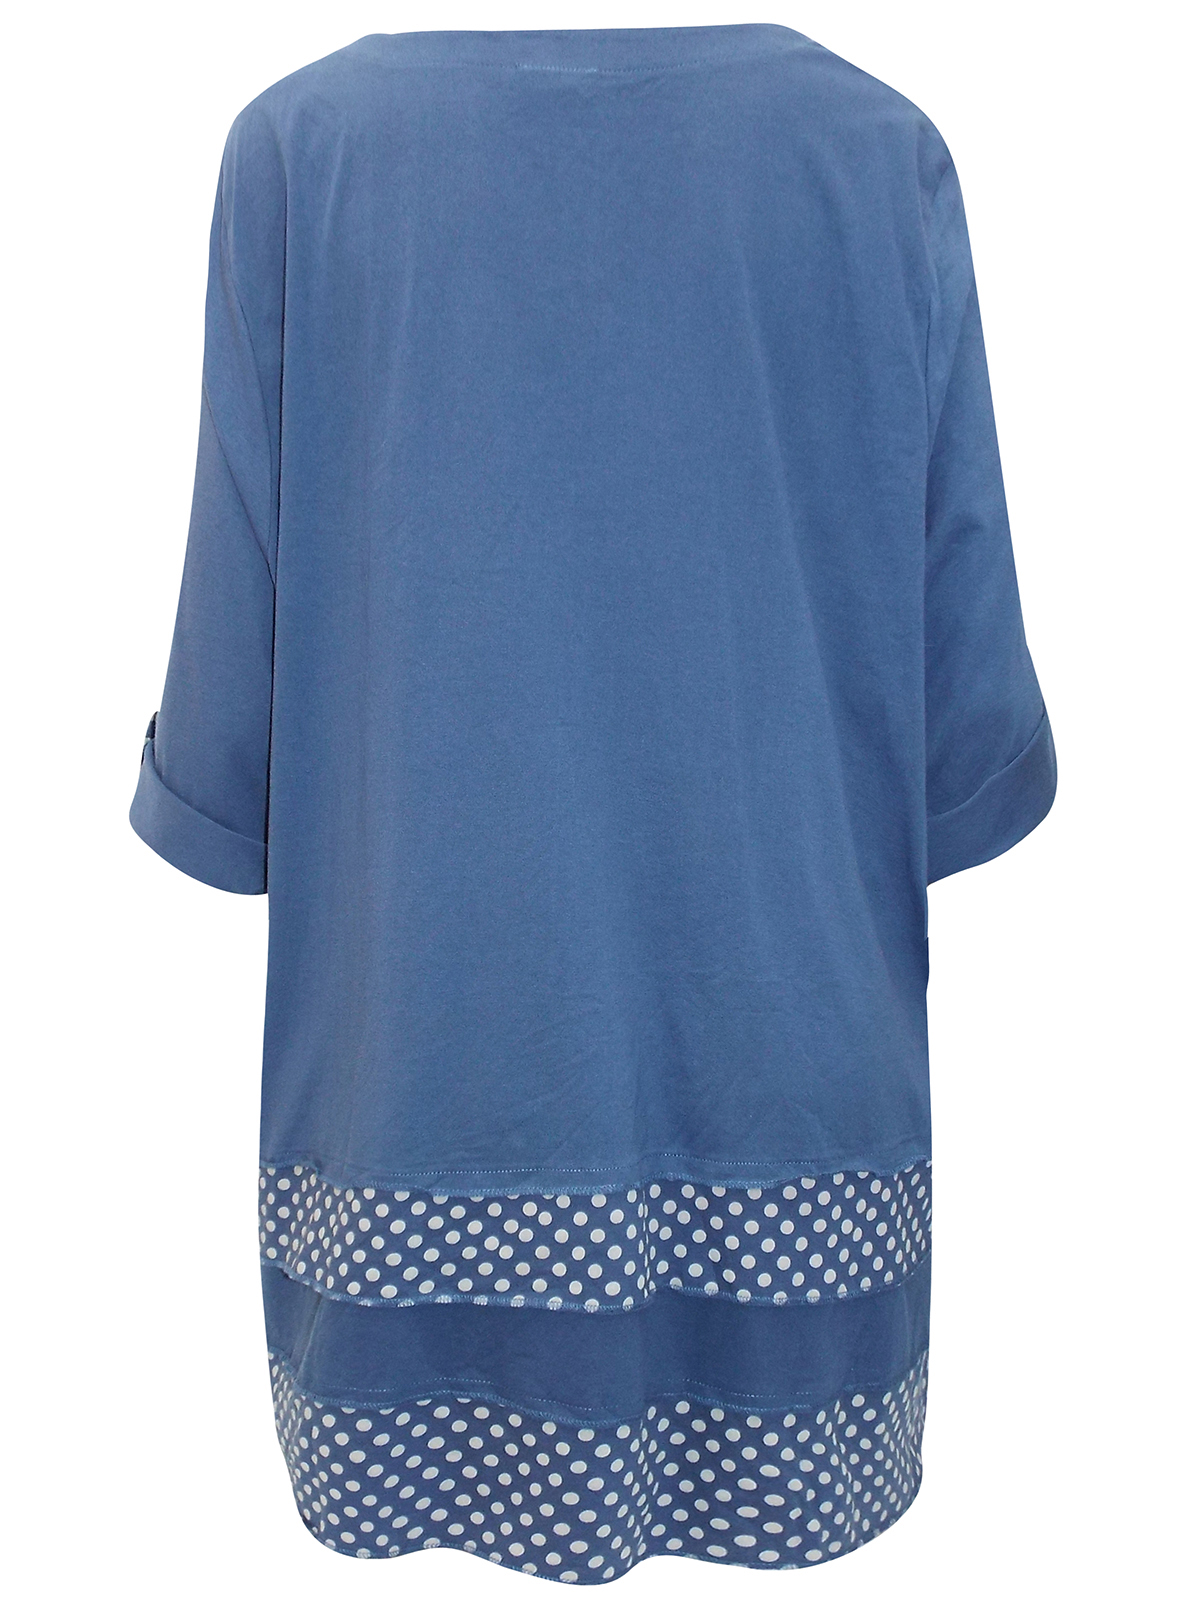 Wholesale Knitwear by Mia Moda - - Mia Moda BLUE Pure Cotton Polka Dot ...